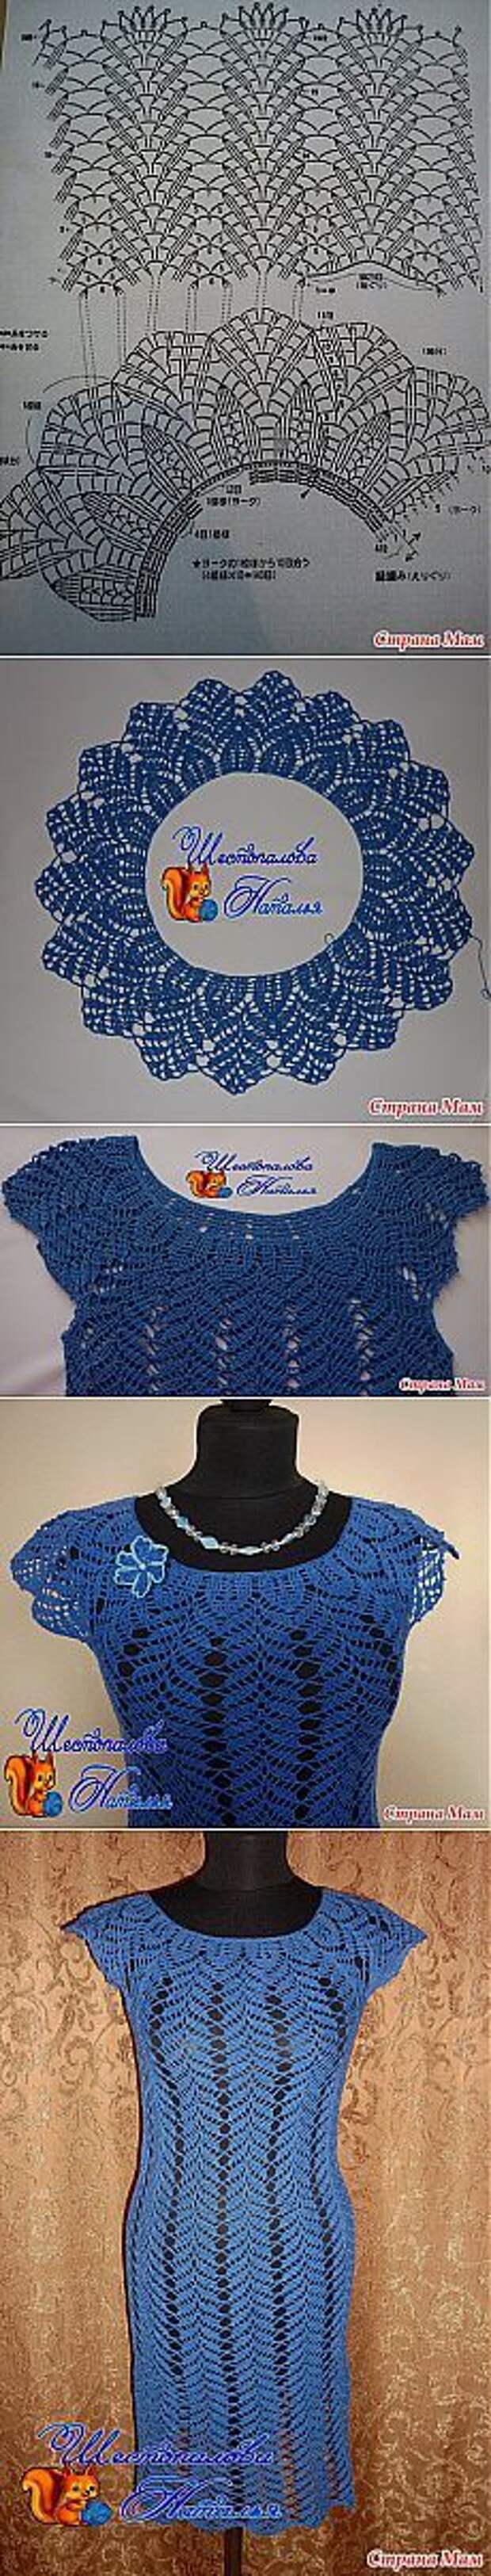 Crochet dress chart pattern: 